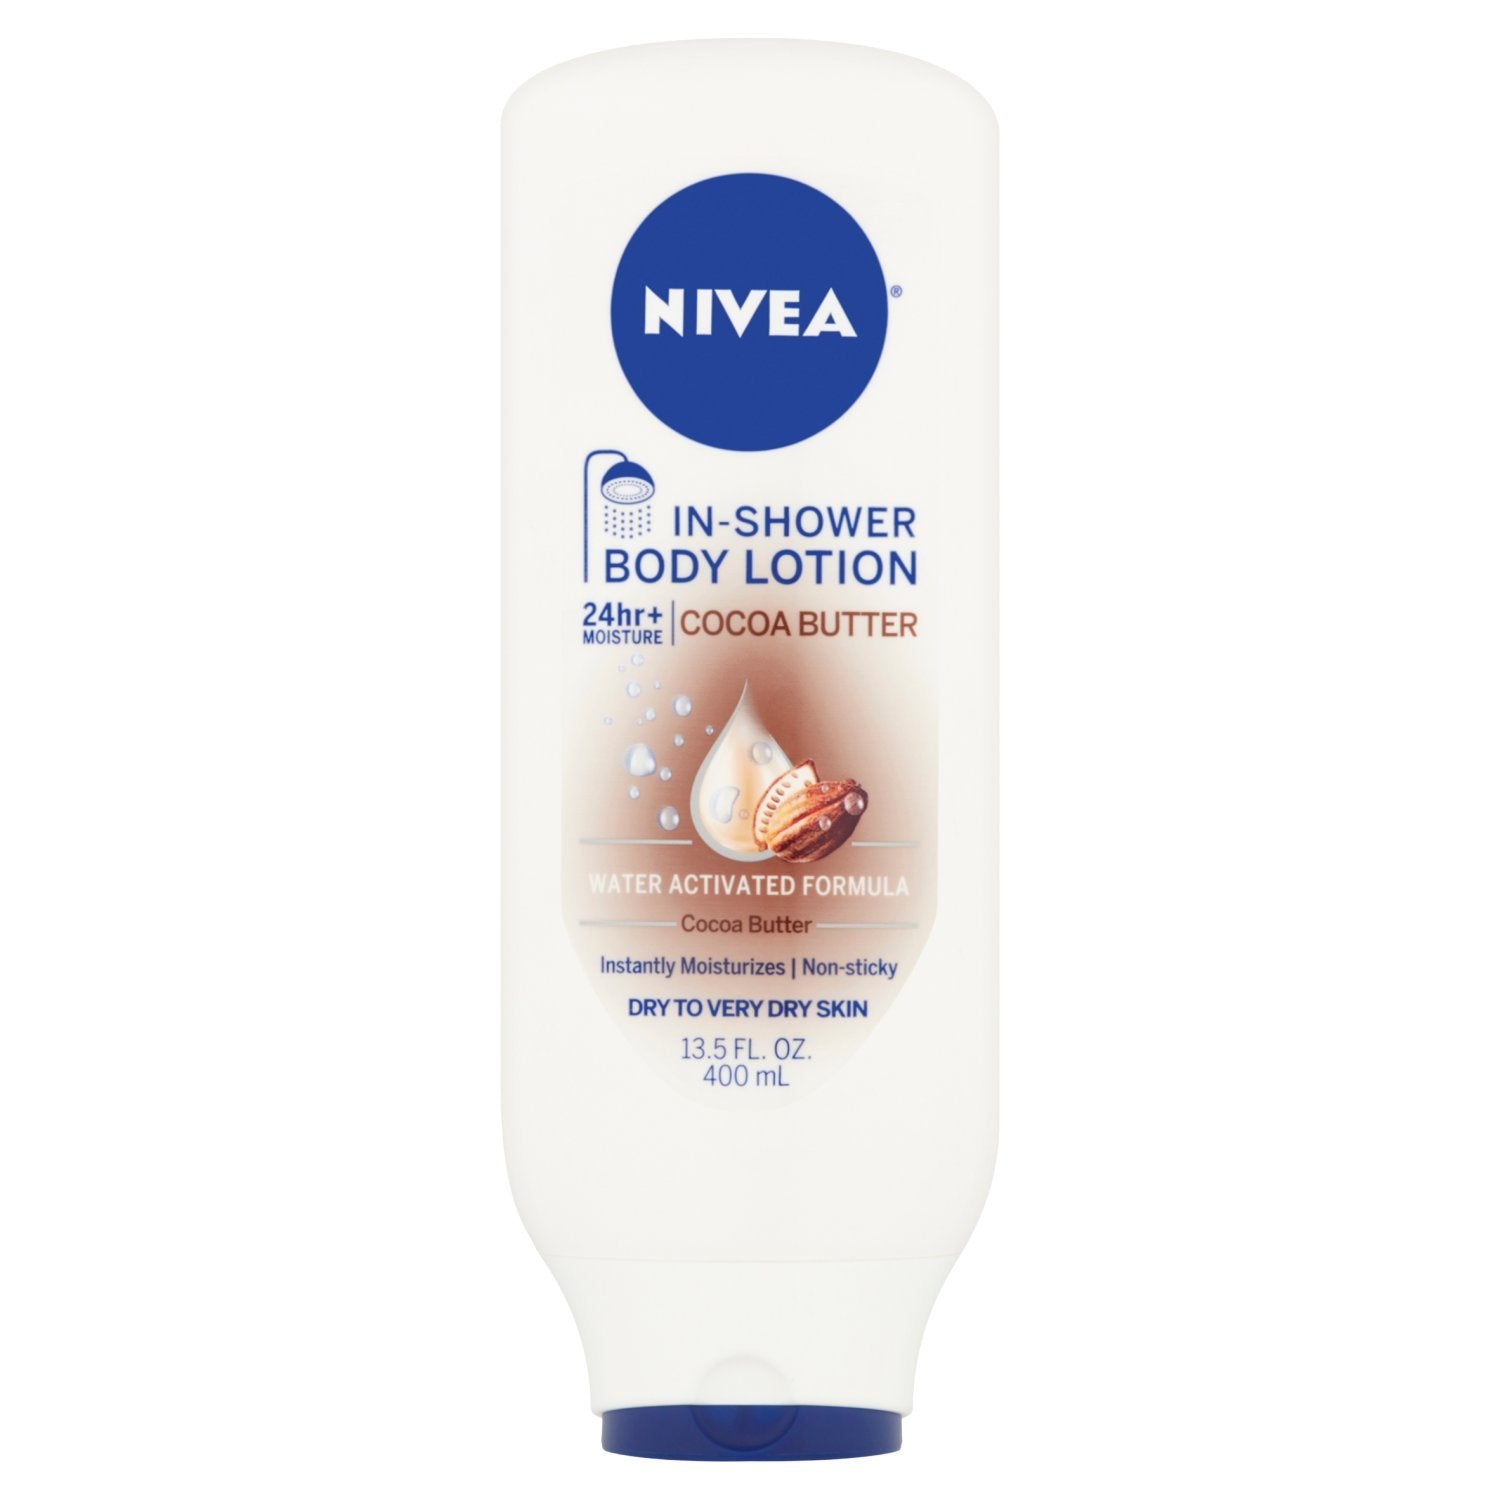 Nivea Cocoa Butter In-Shower Body Lotion 13.5oz